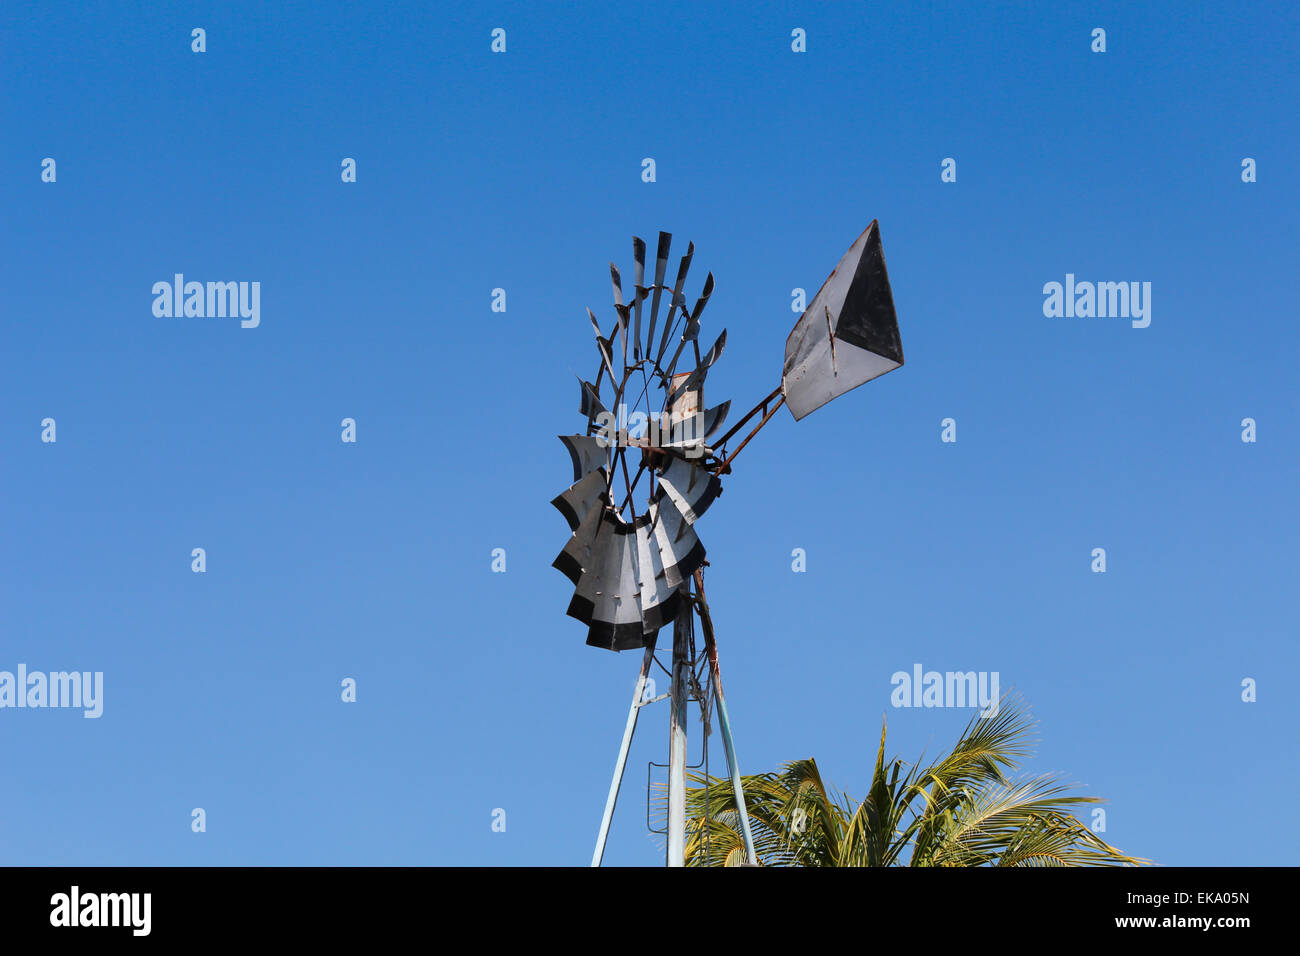 Windmill on the field Stock Photo